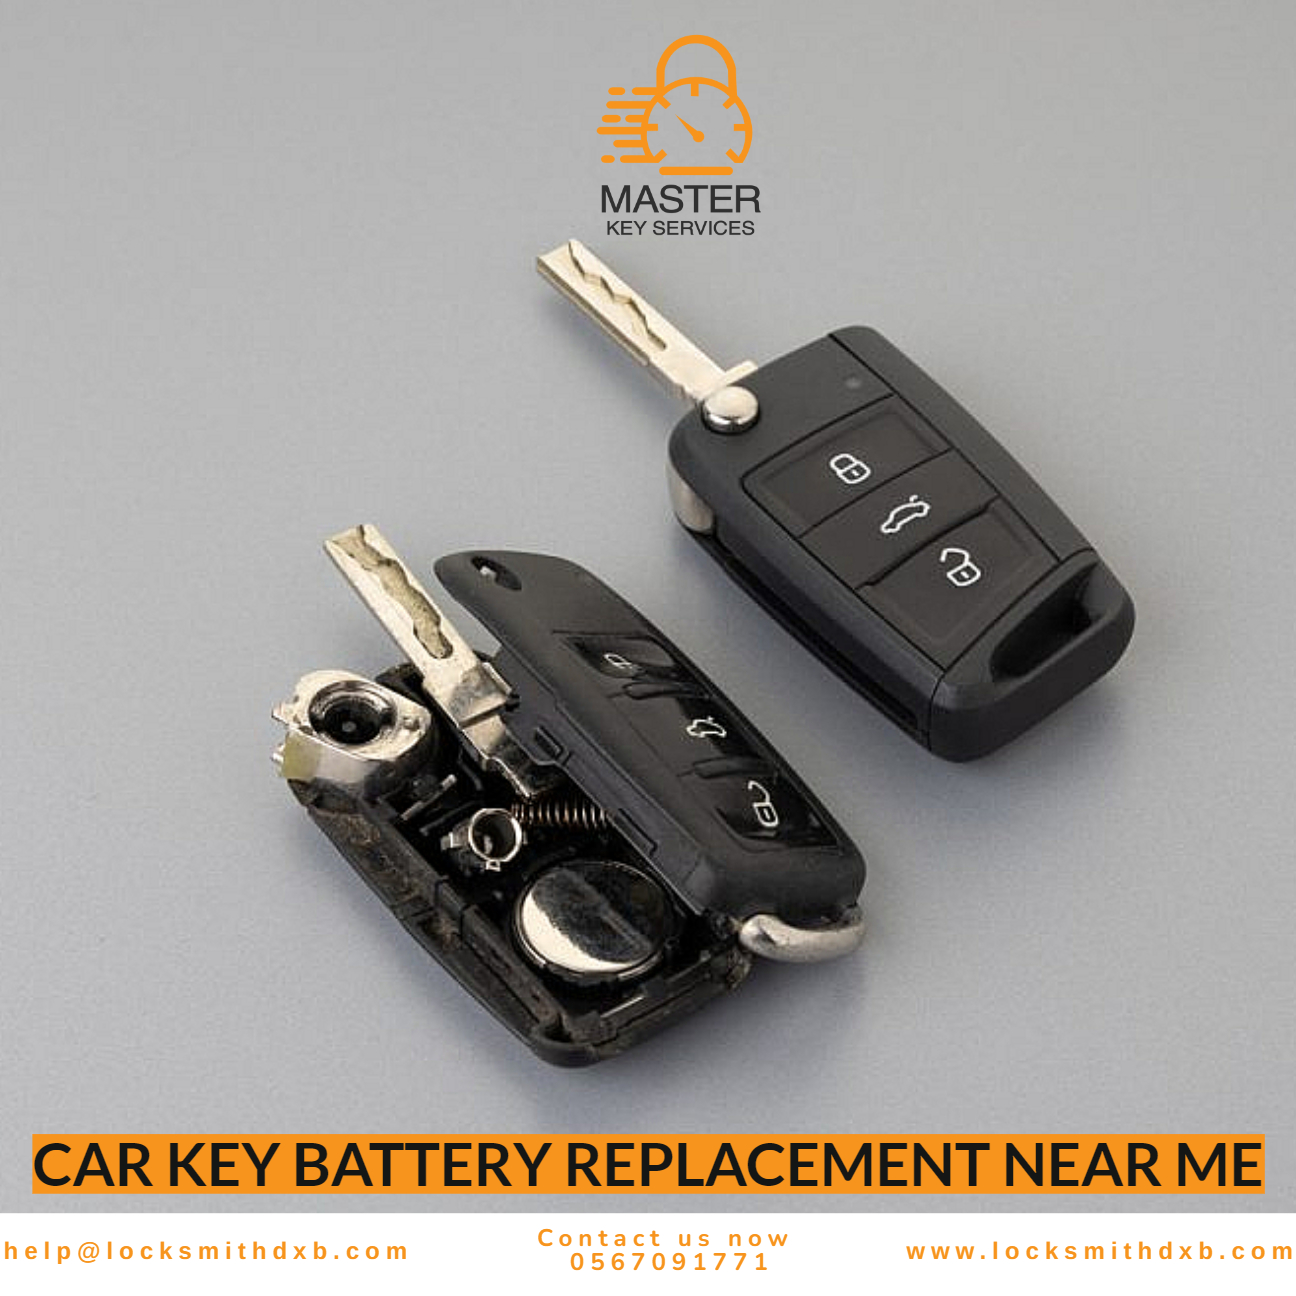 Car key battery replacement near me